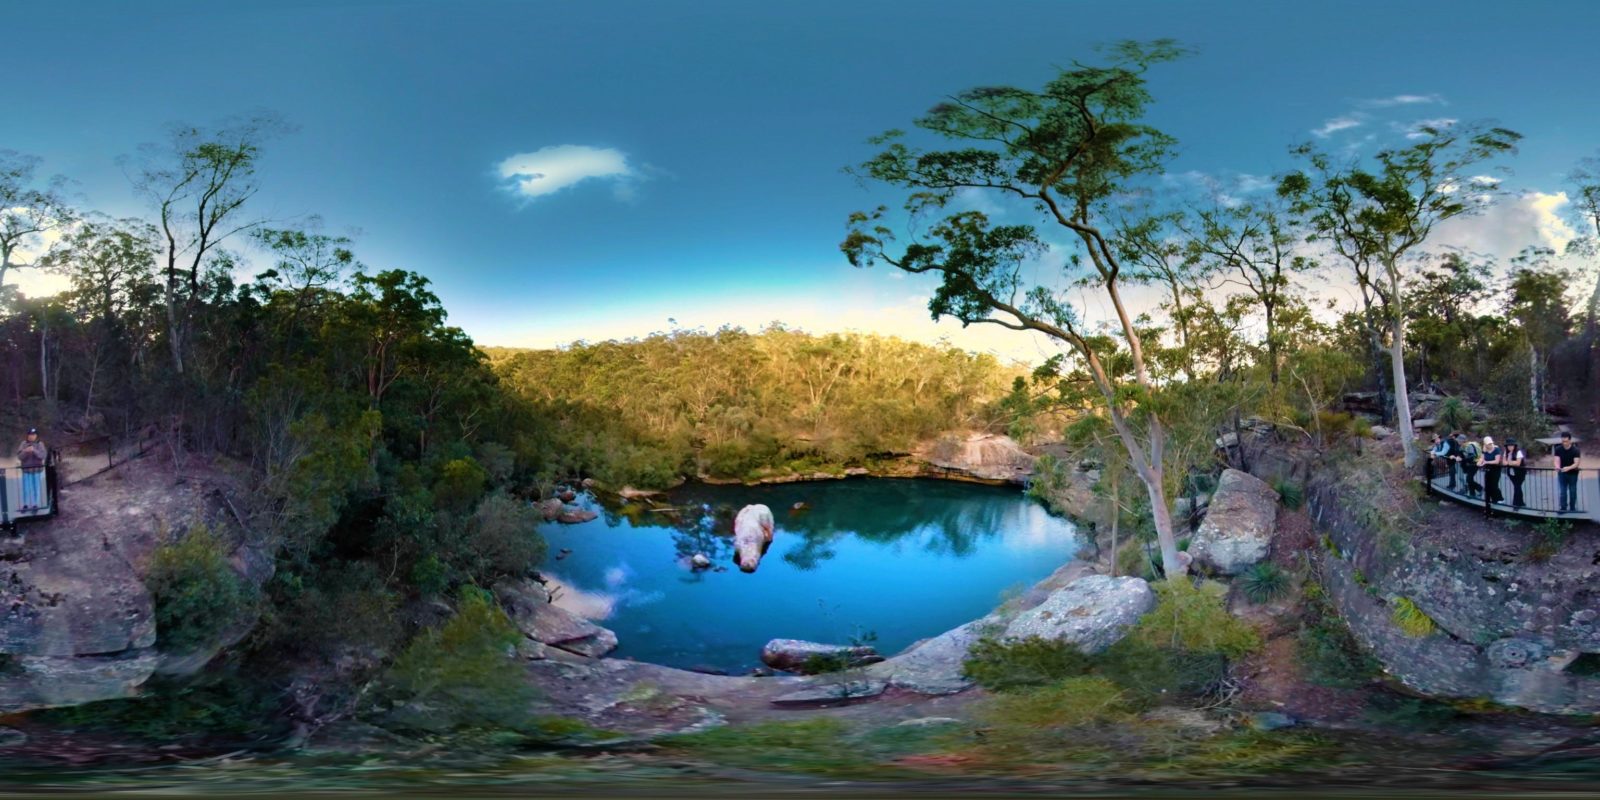 Minerva Pool in Dharawal National Park